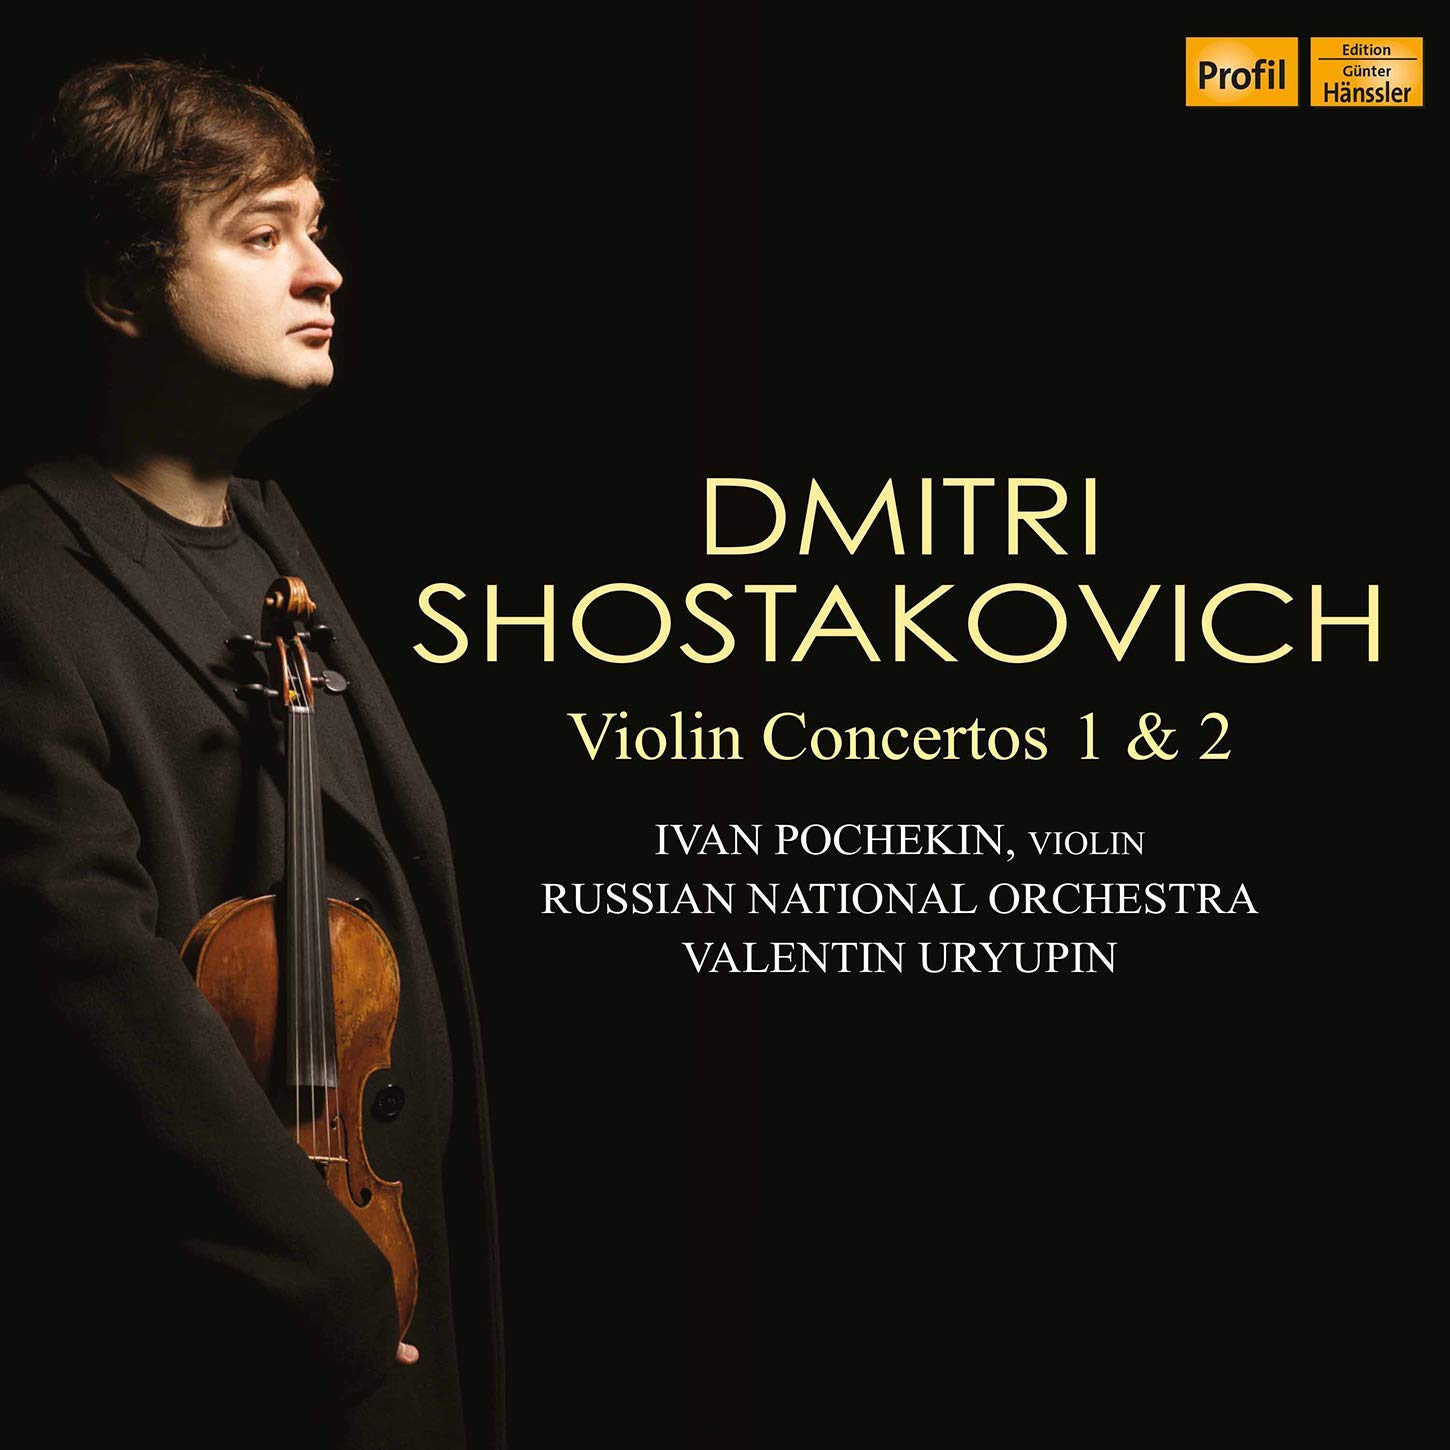 PH19073. SHOSTAKOVICH Violin Concertos 1 & 2 (Ivan Pocheki)